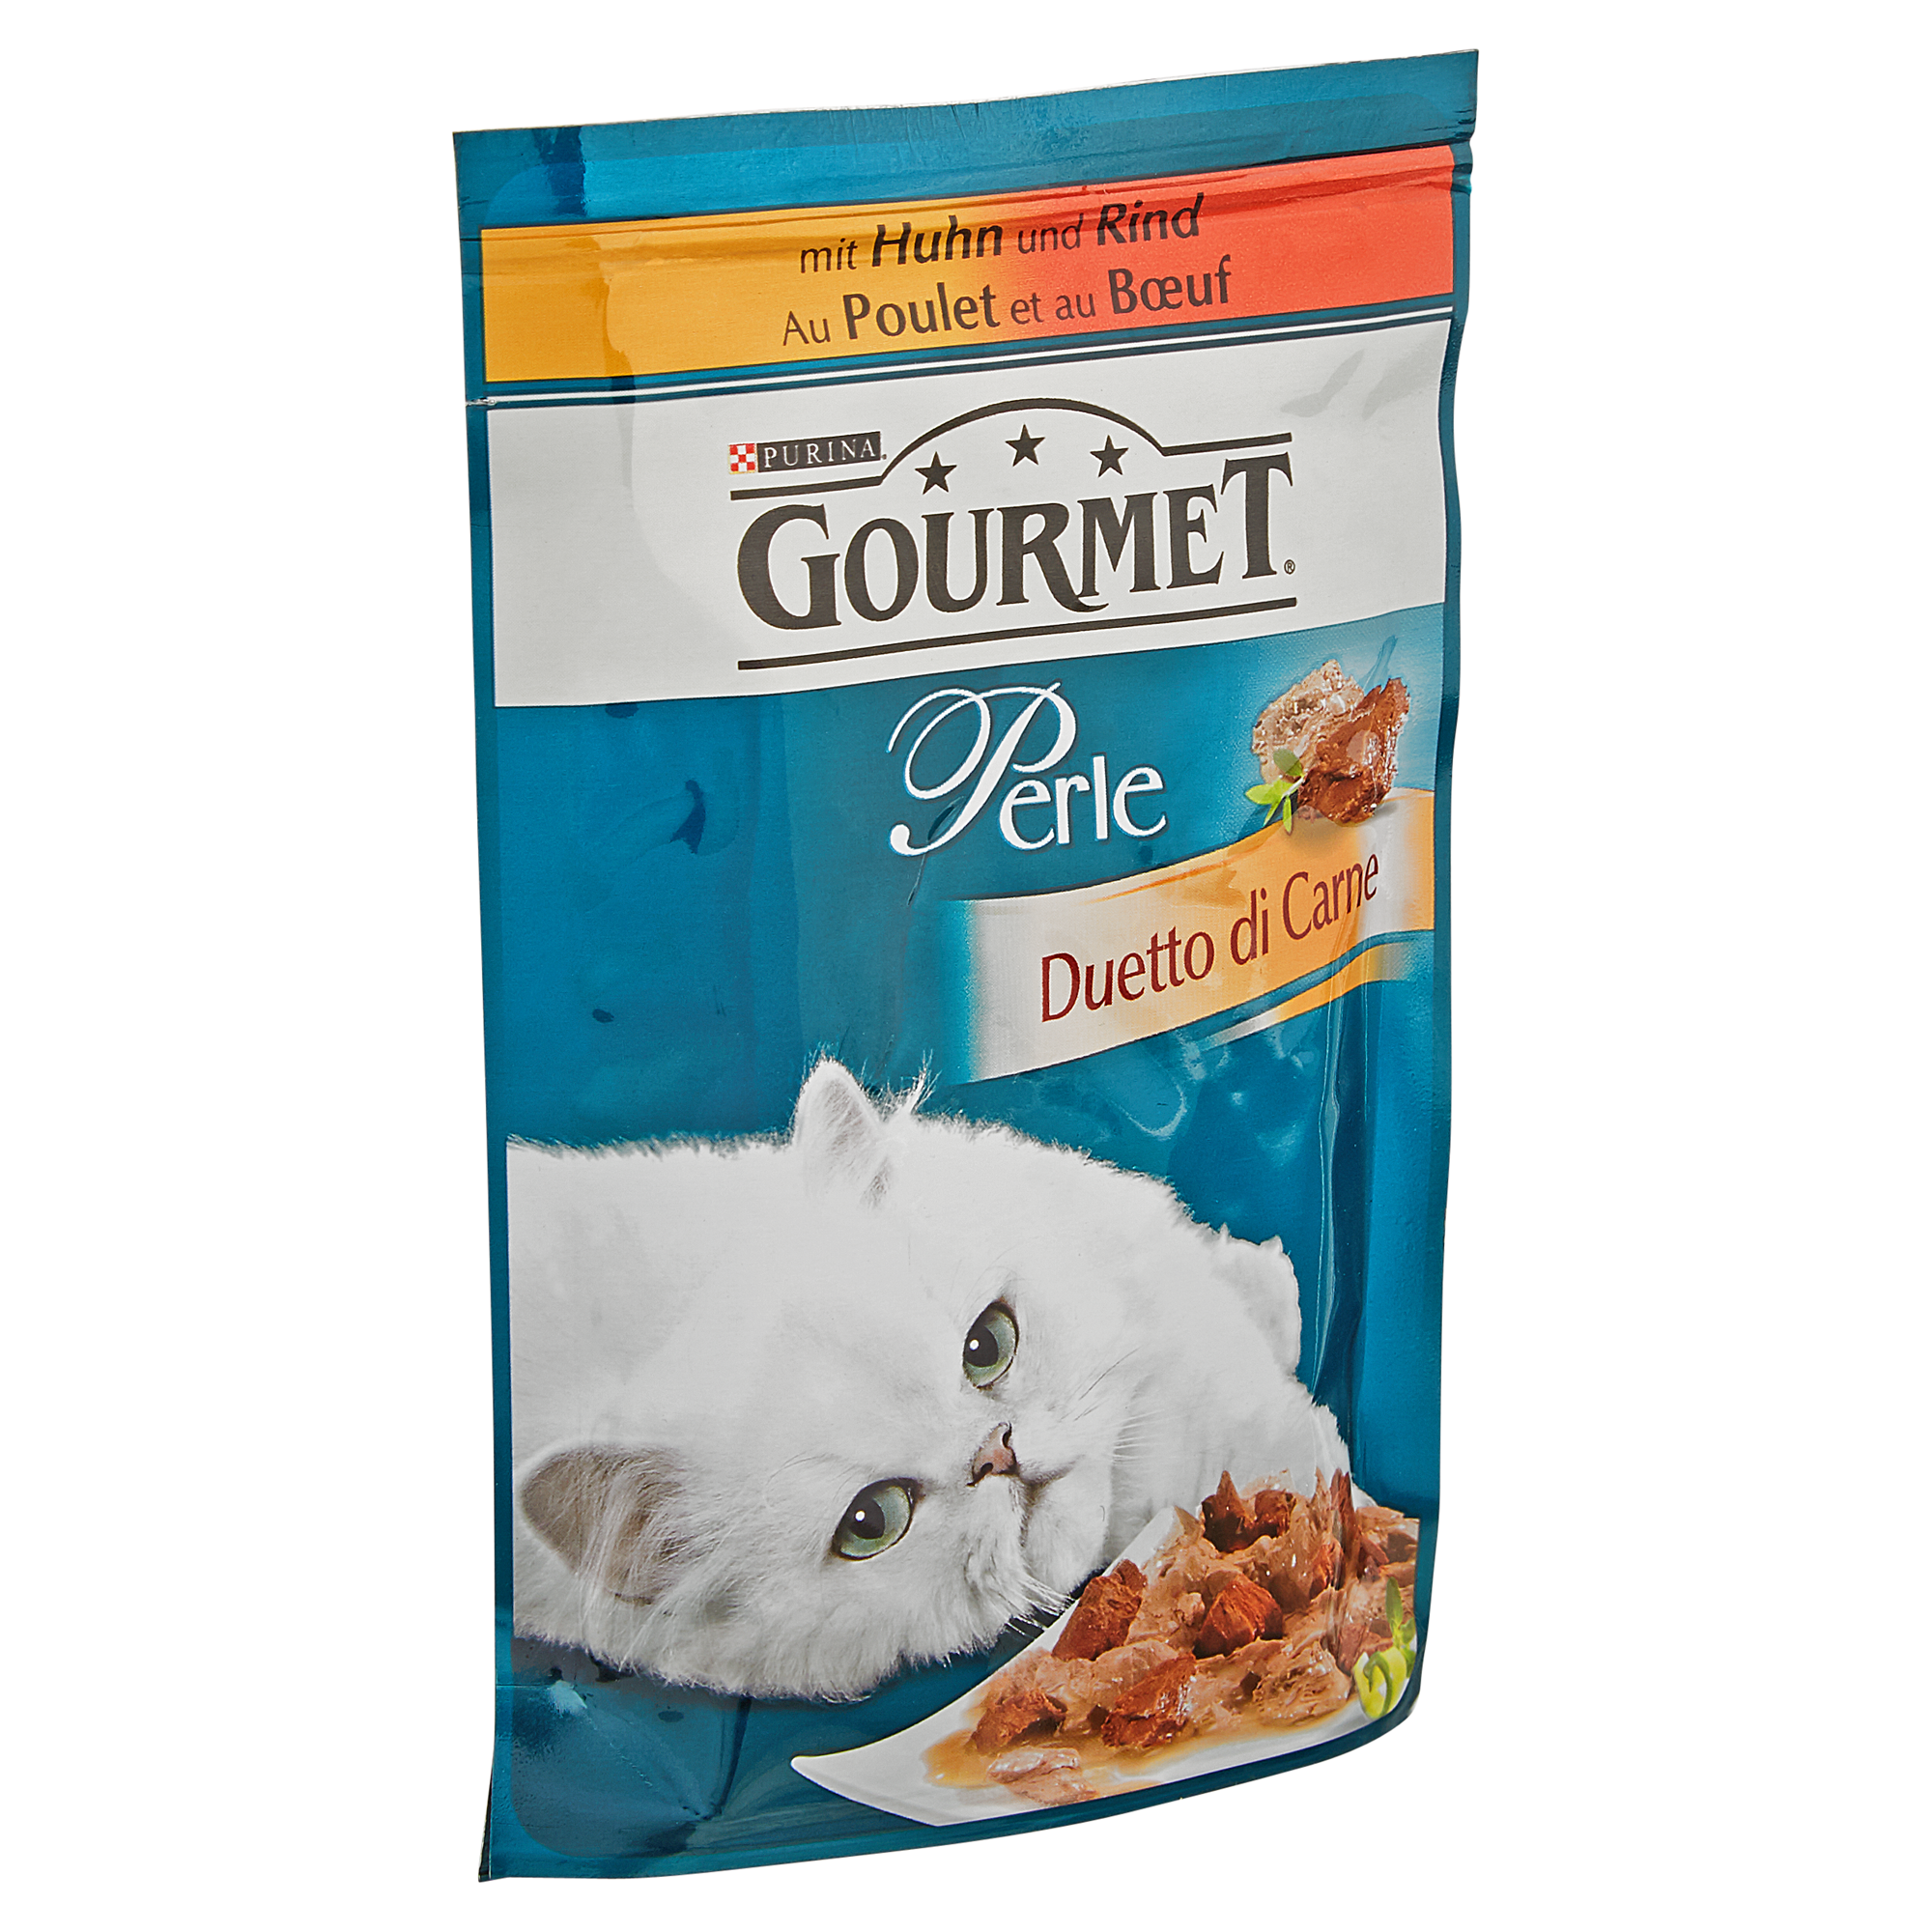 Katzennassfutter "Gourmet Perle" Duetto di Carne mit Huhn/Rind 85 g + product picture